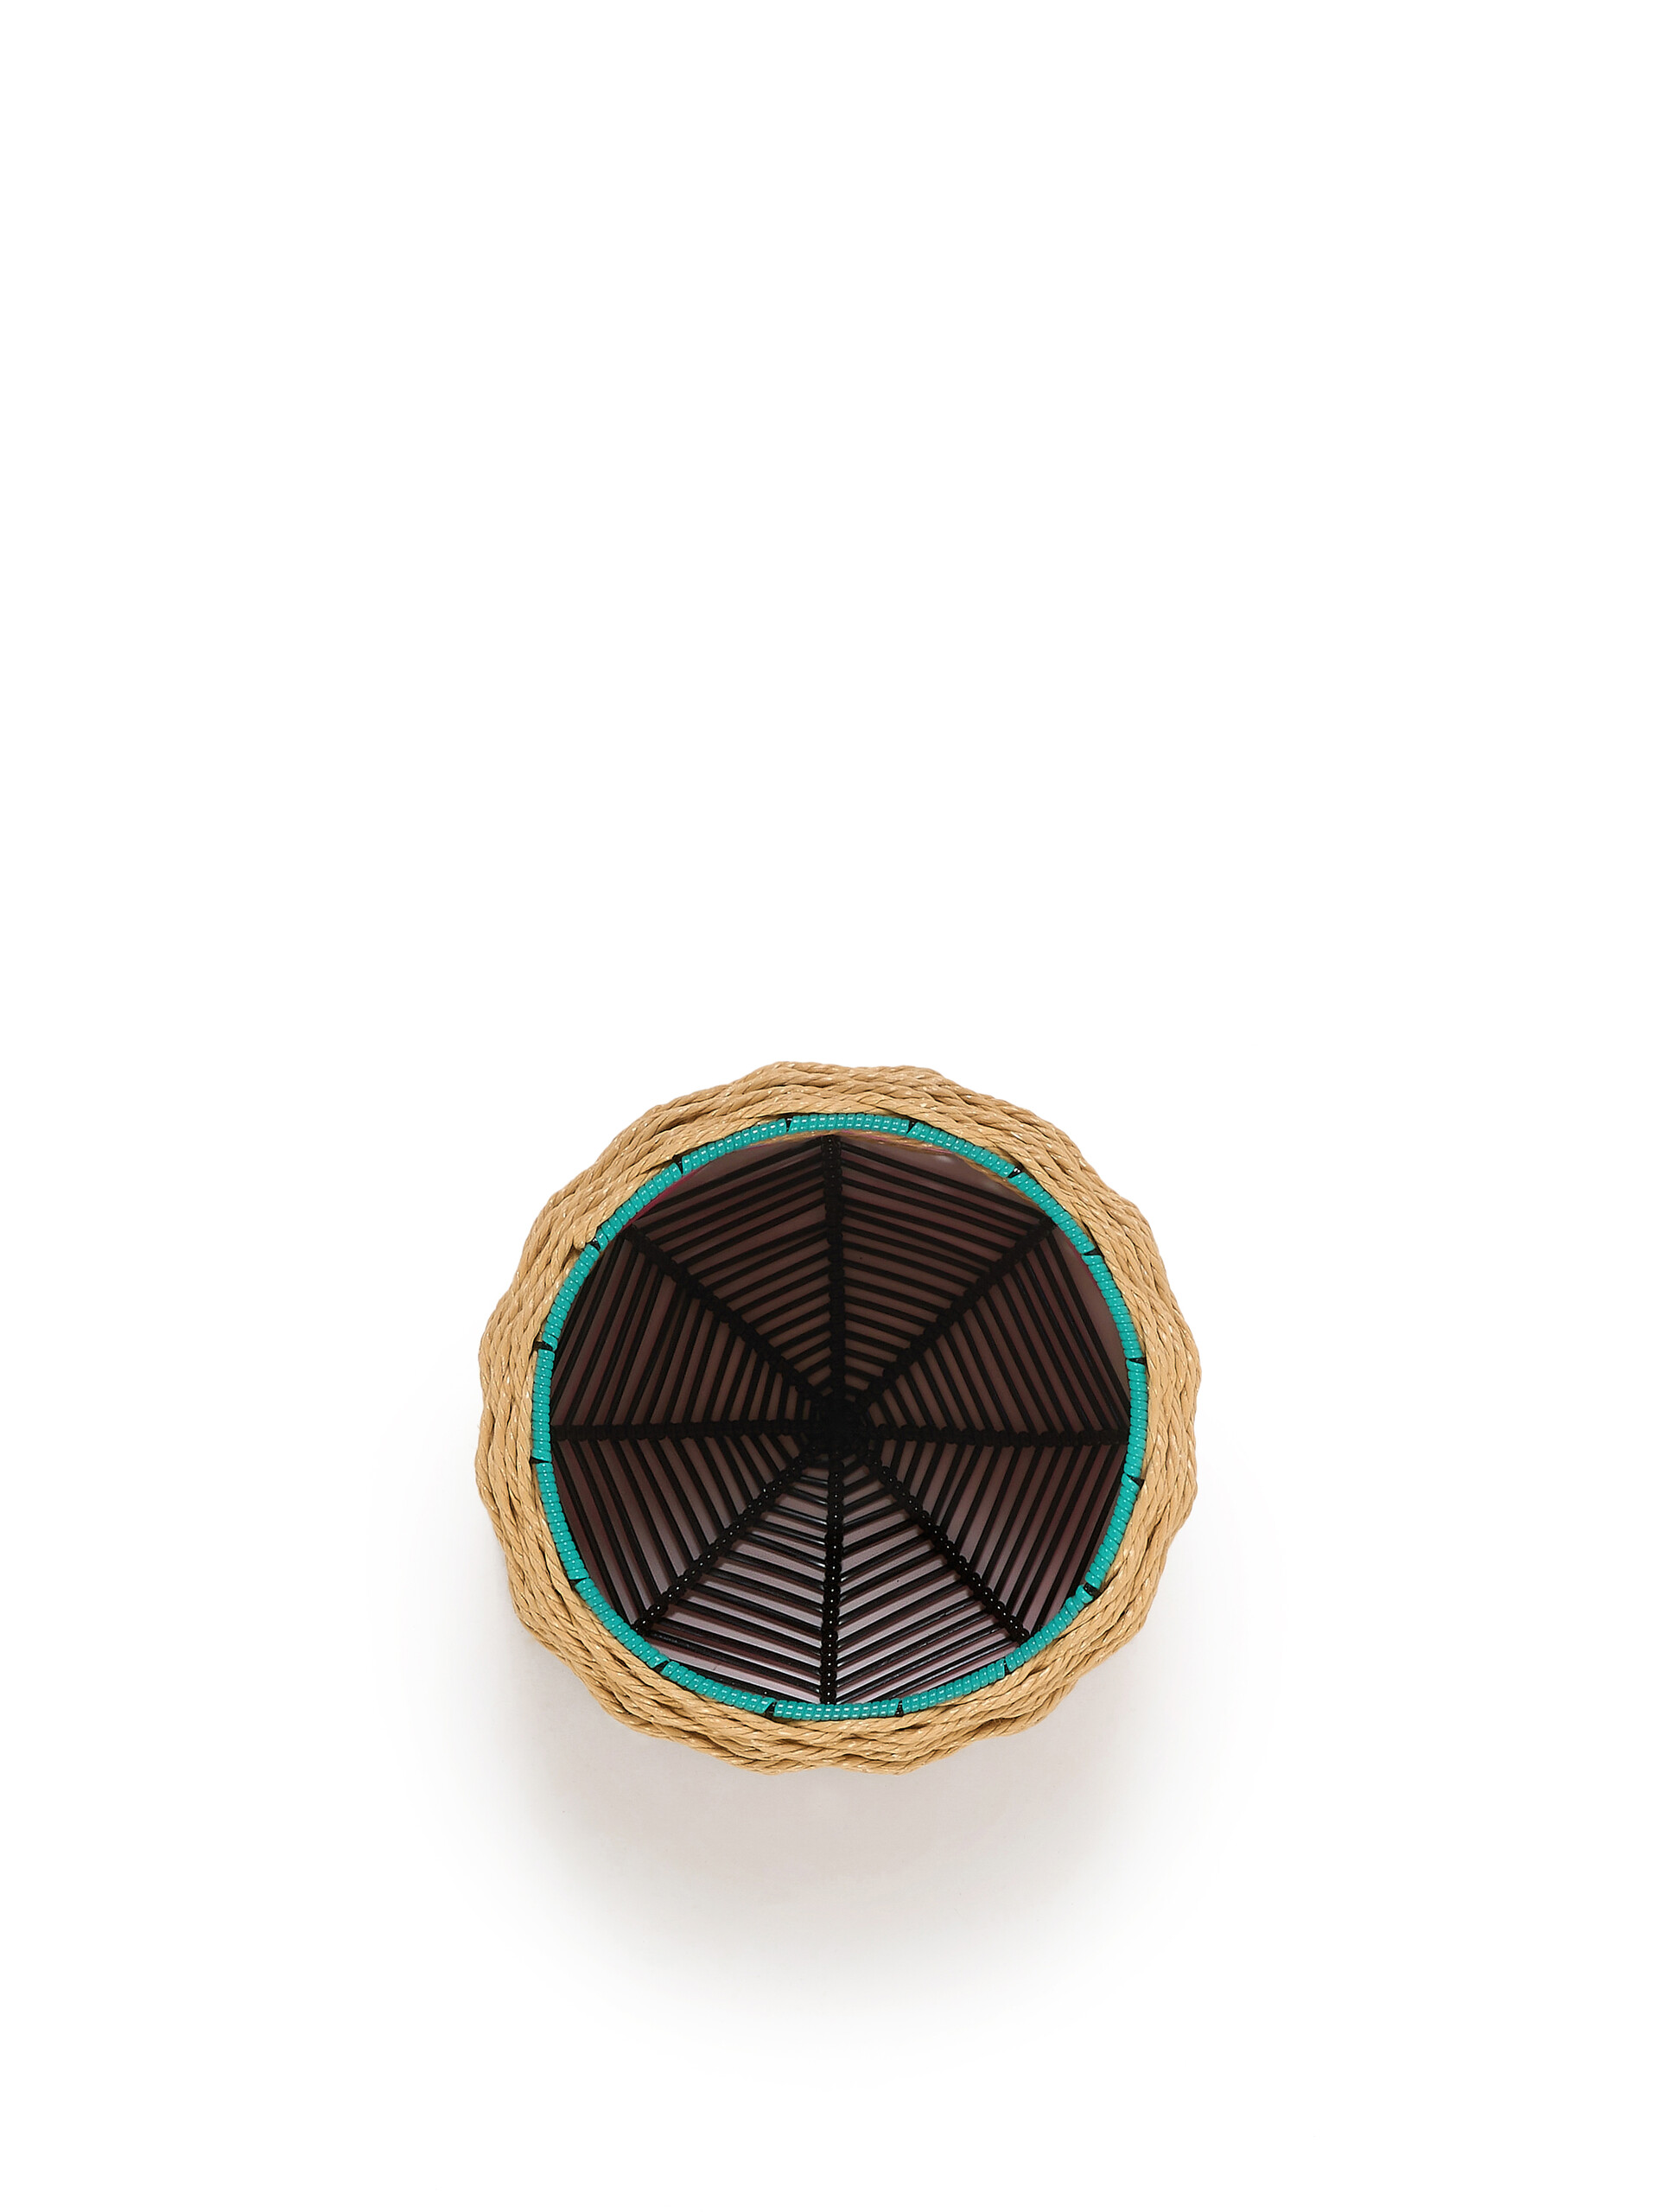 MARNI MARKET blue raffia-effect basket - Accessories - Image 4